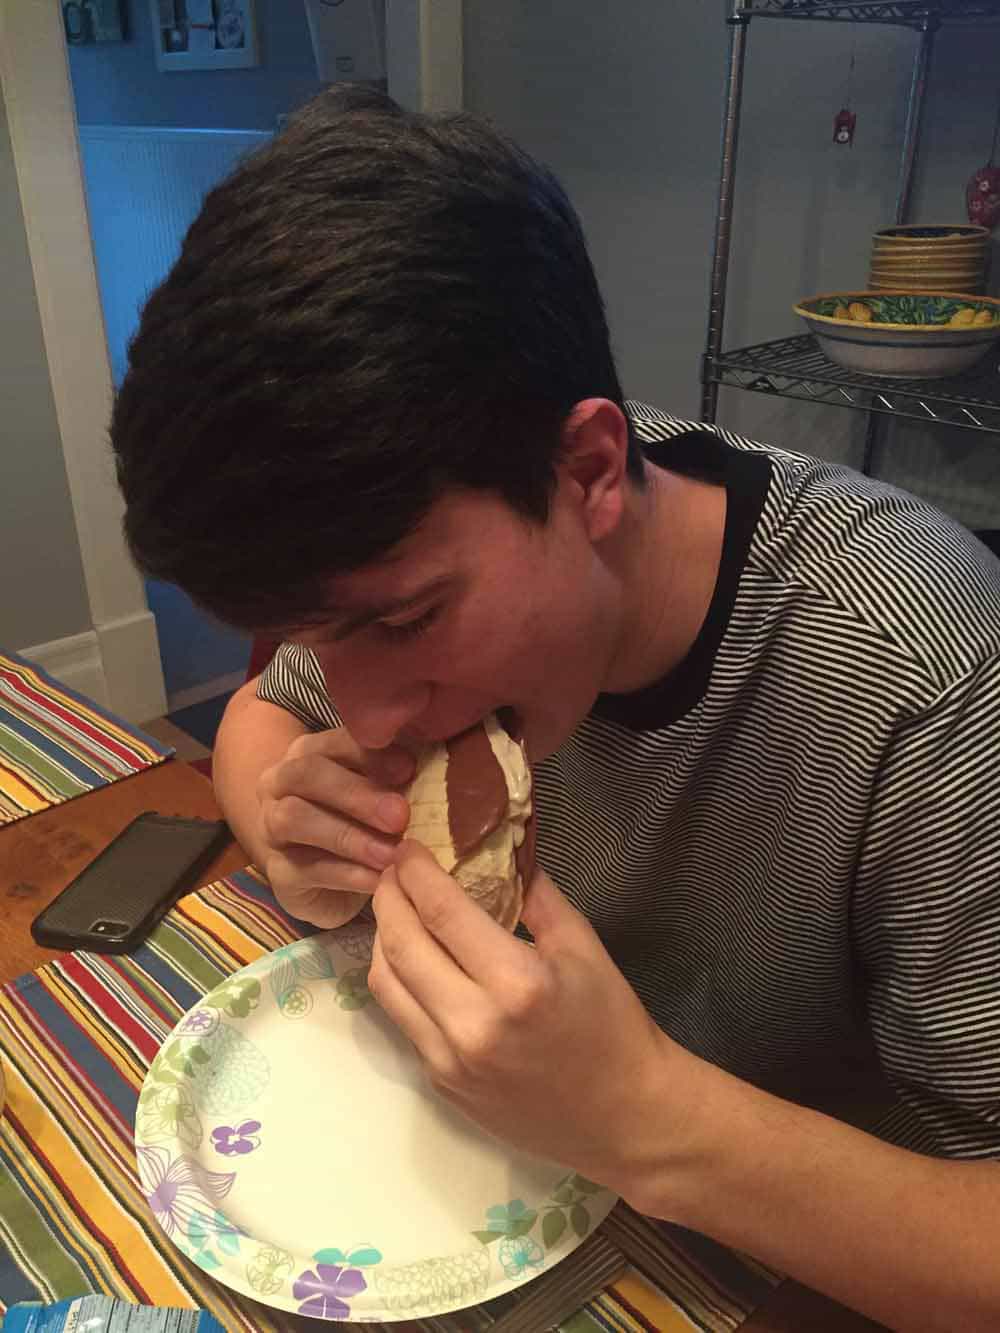 eating the choco taco